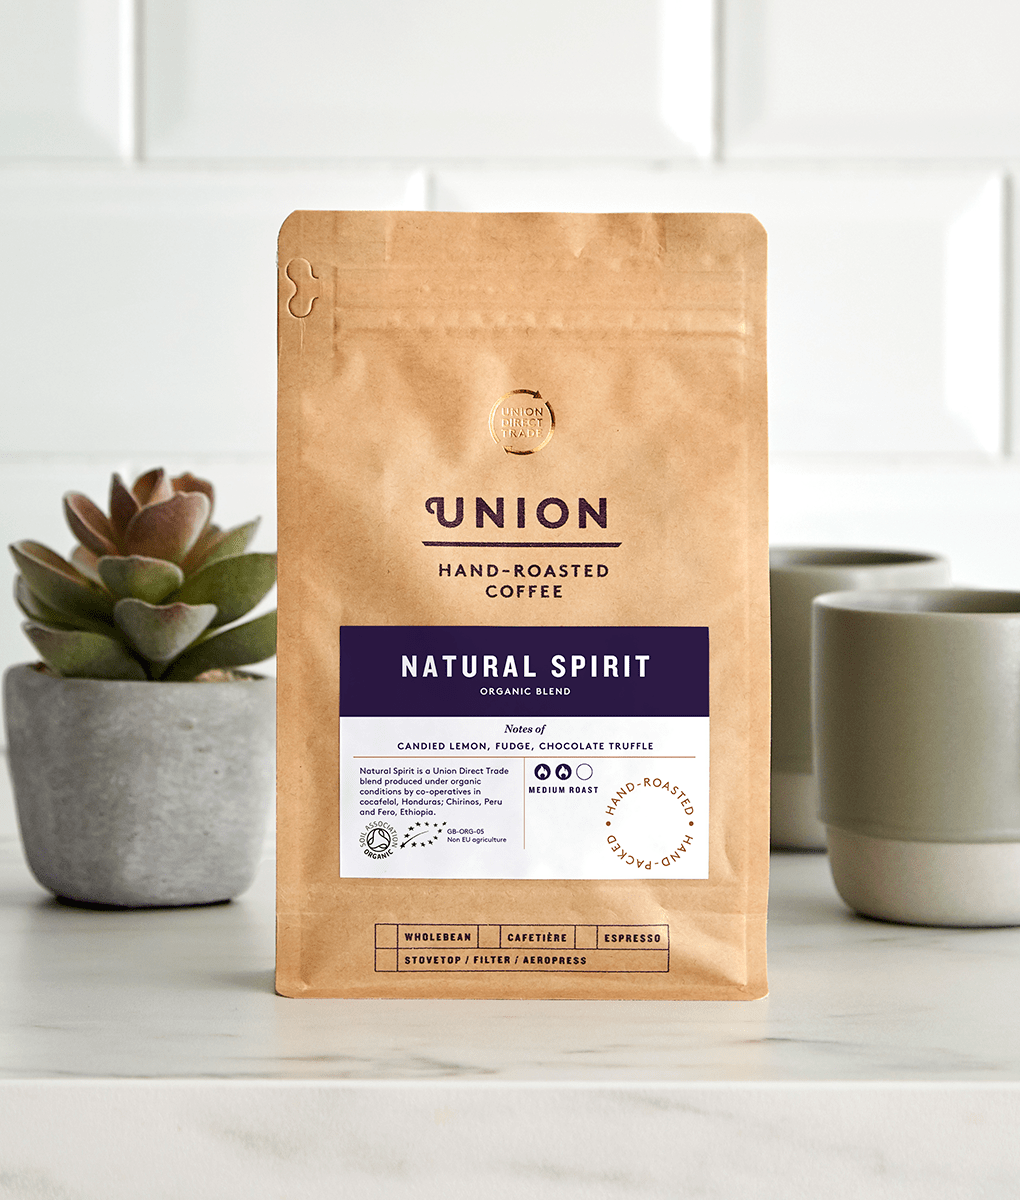 Natural Spirit, Organic Blend, Union Coffee Bag,Wholebean,Cafetiere,Filter,Espresso,200g,1kg